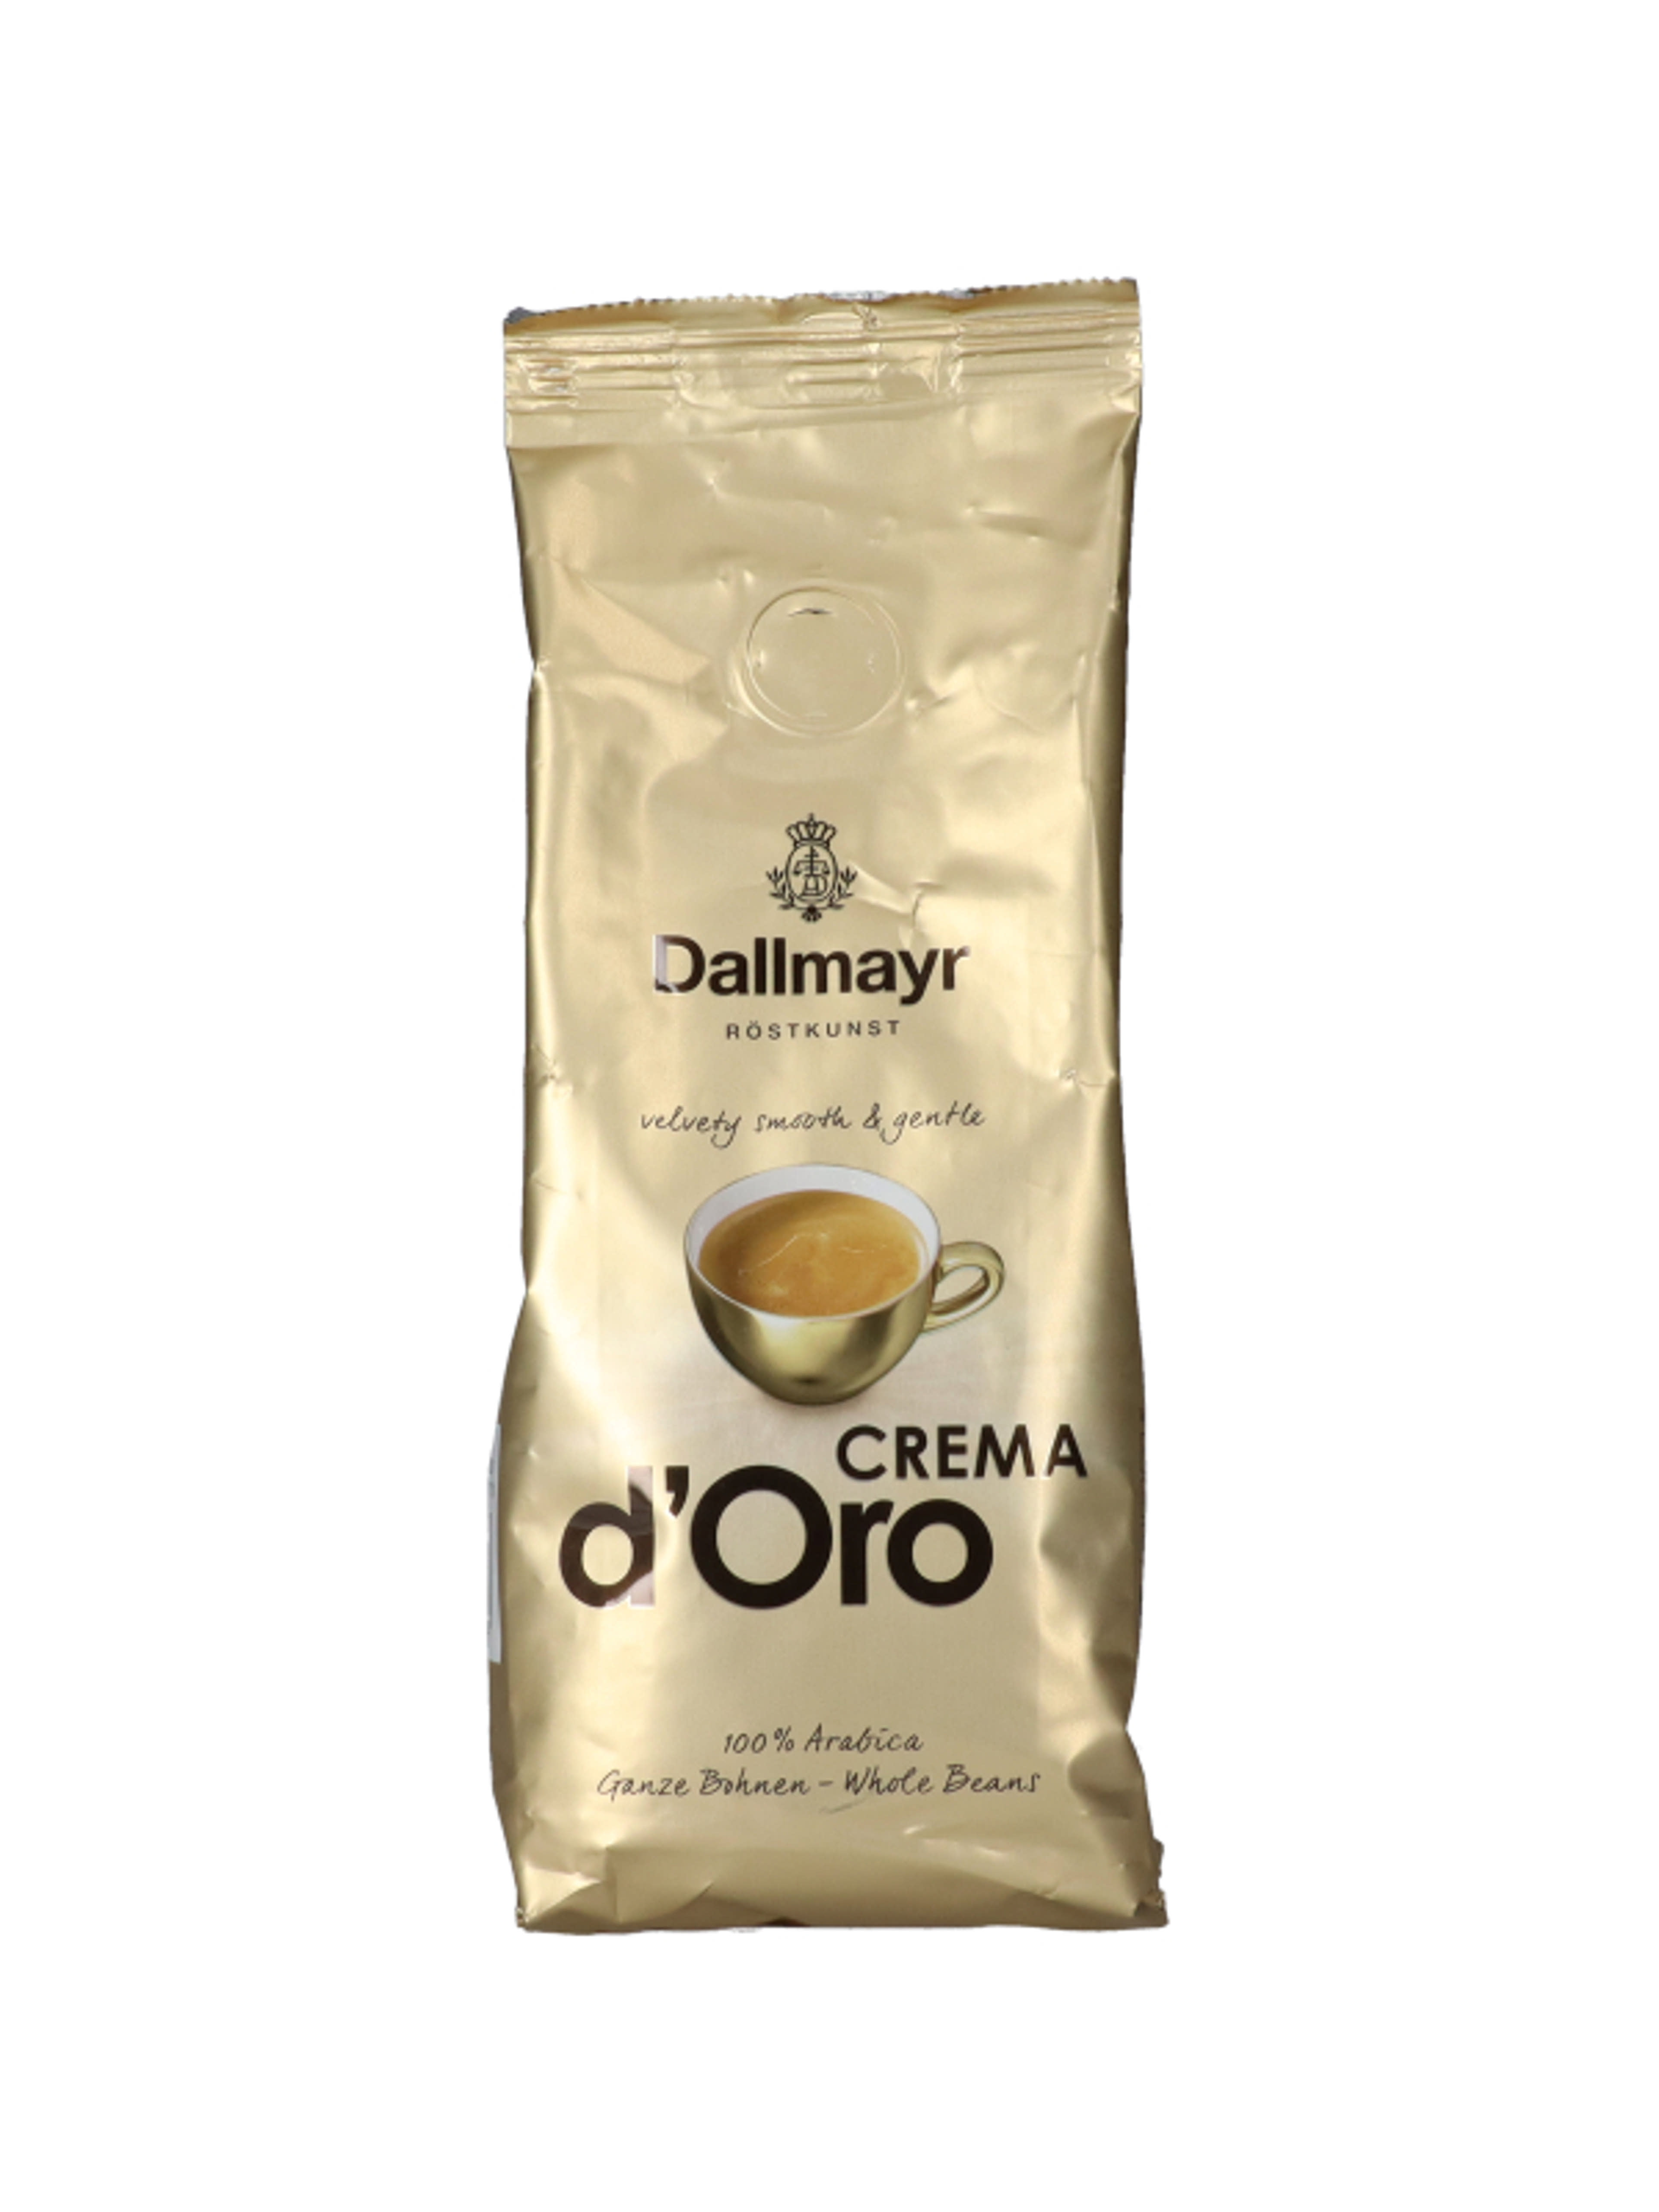 Dallmayr Crema Doro szemes kávé - 200 g